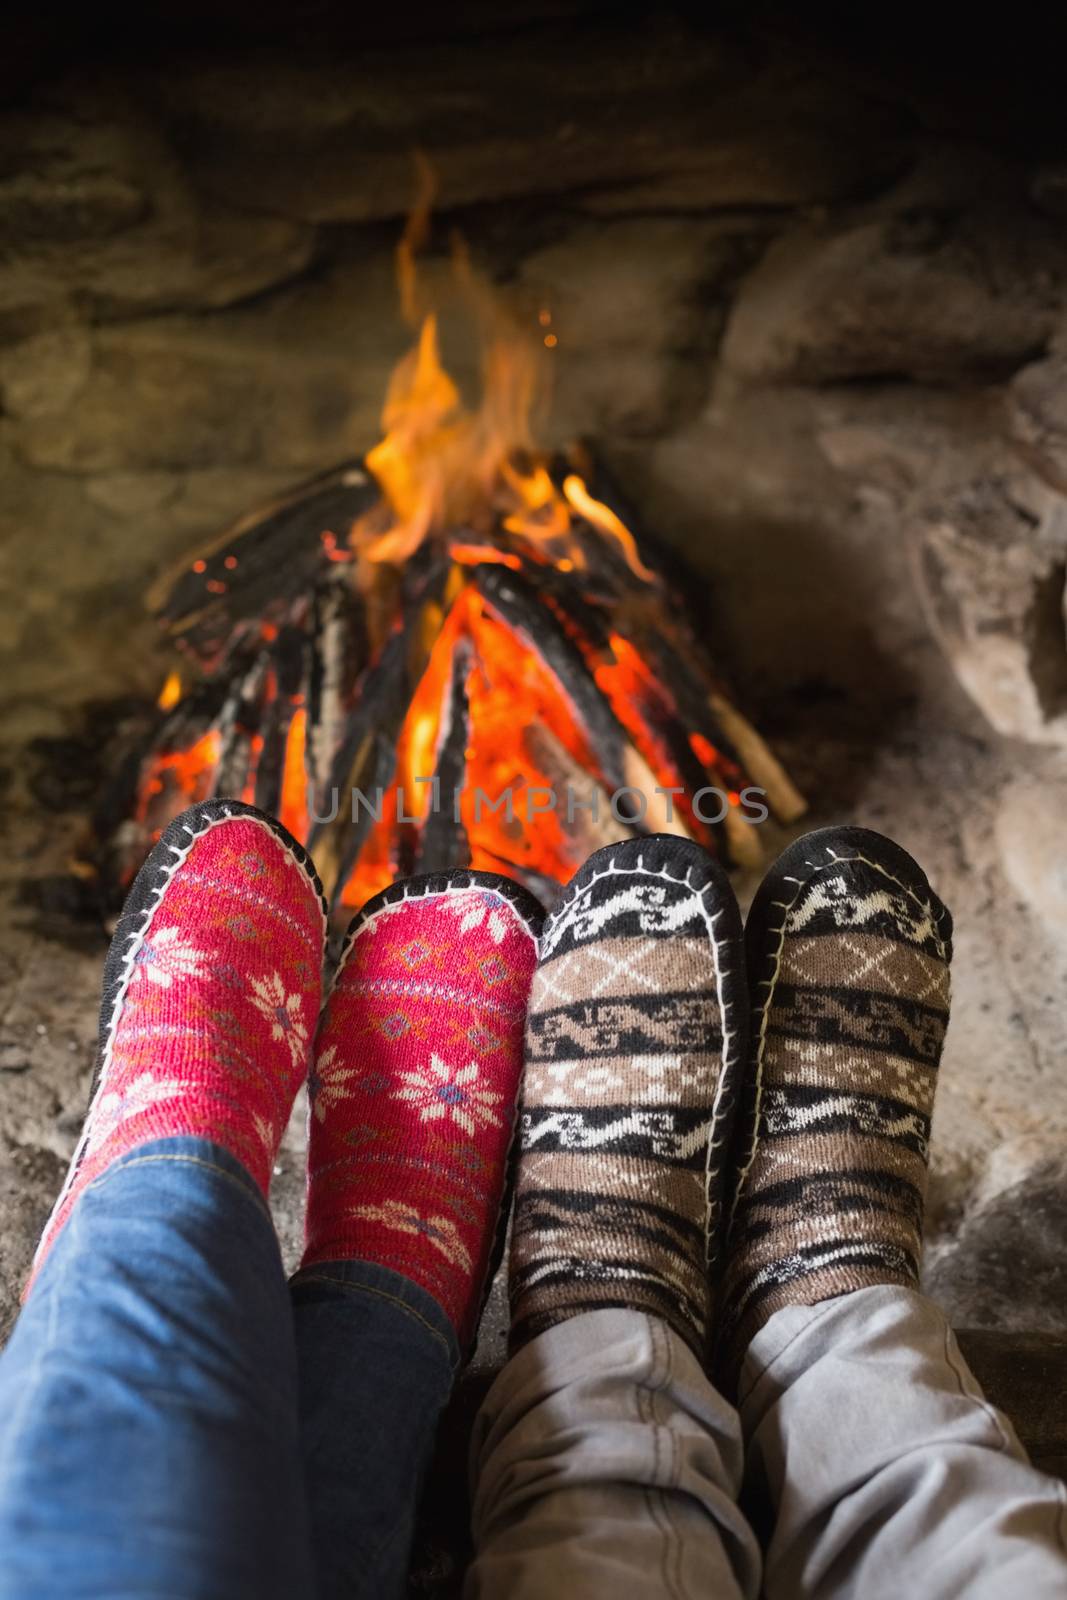 Romantic couples legs in socks in front of fireplace by Wavebreakmedia